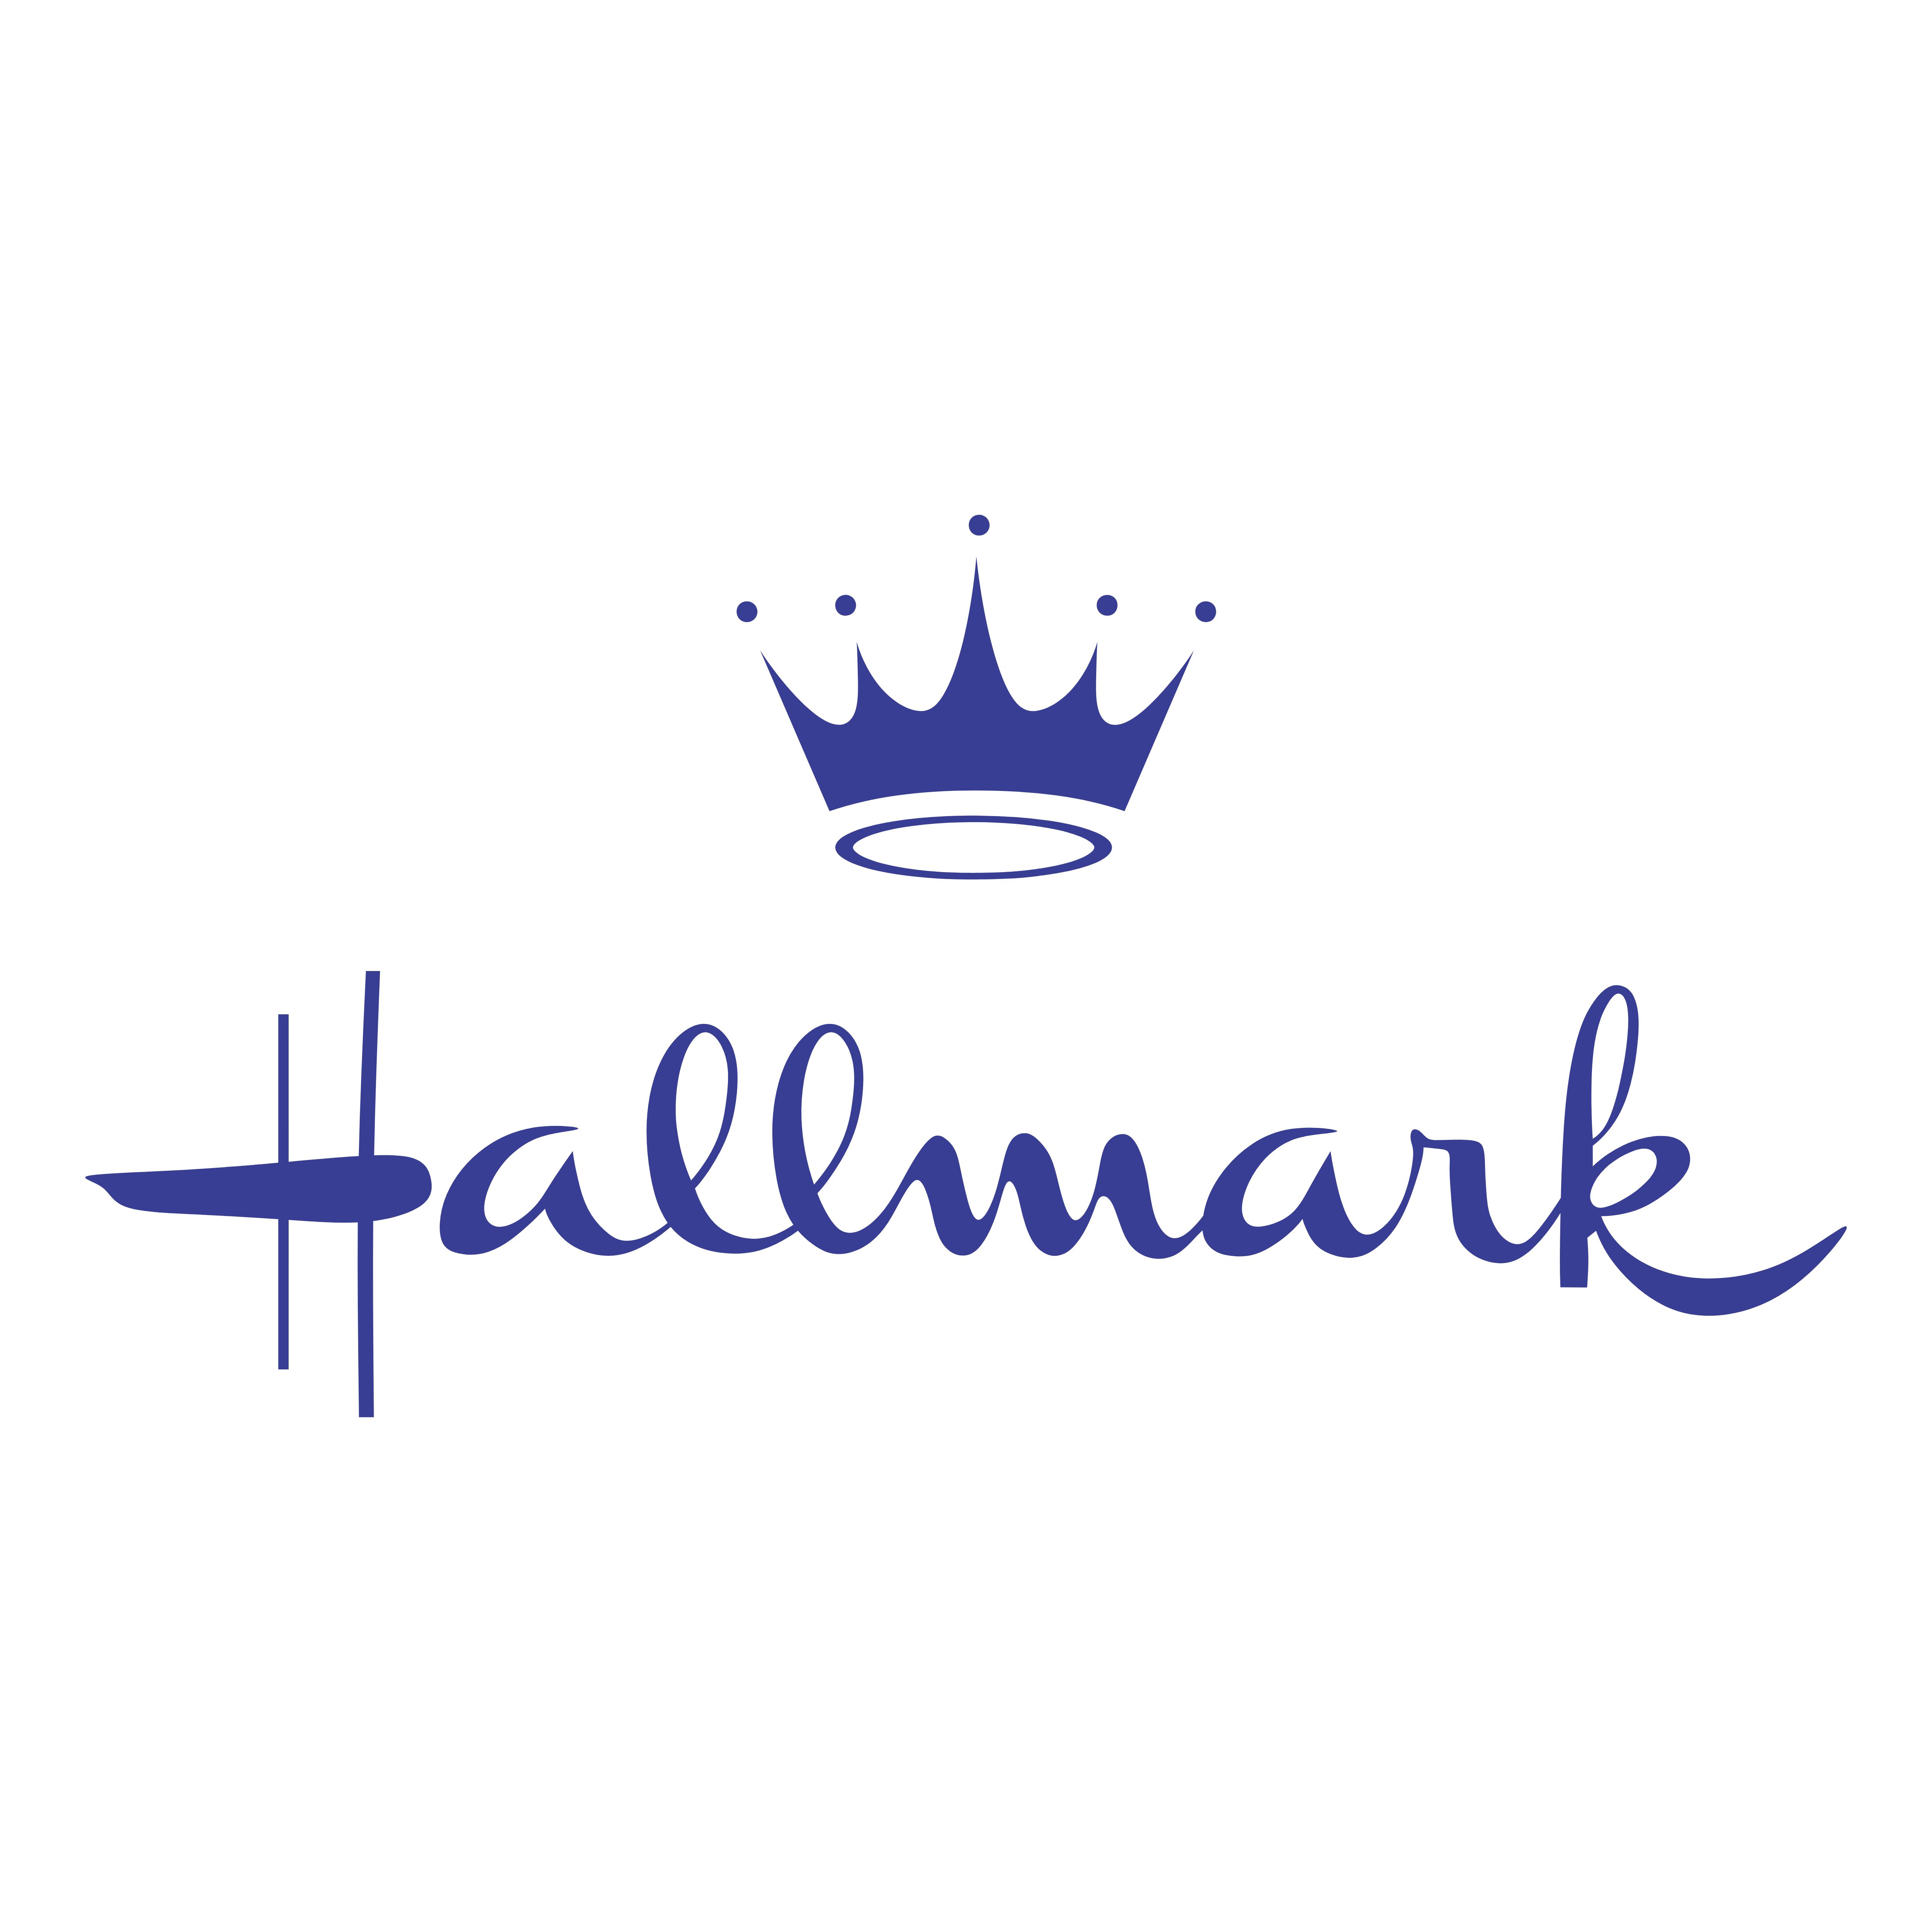 Hallmark Up To 20% Off + Free P&P